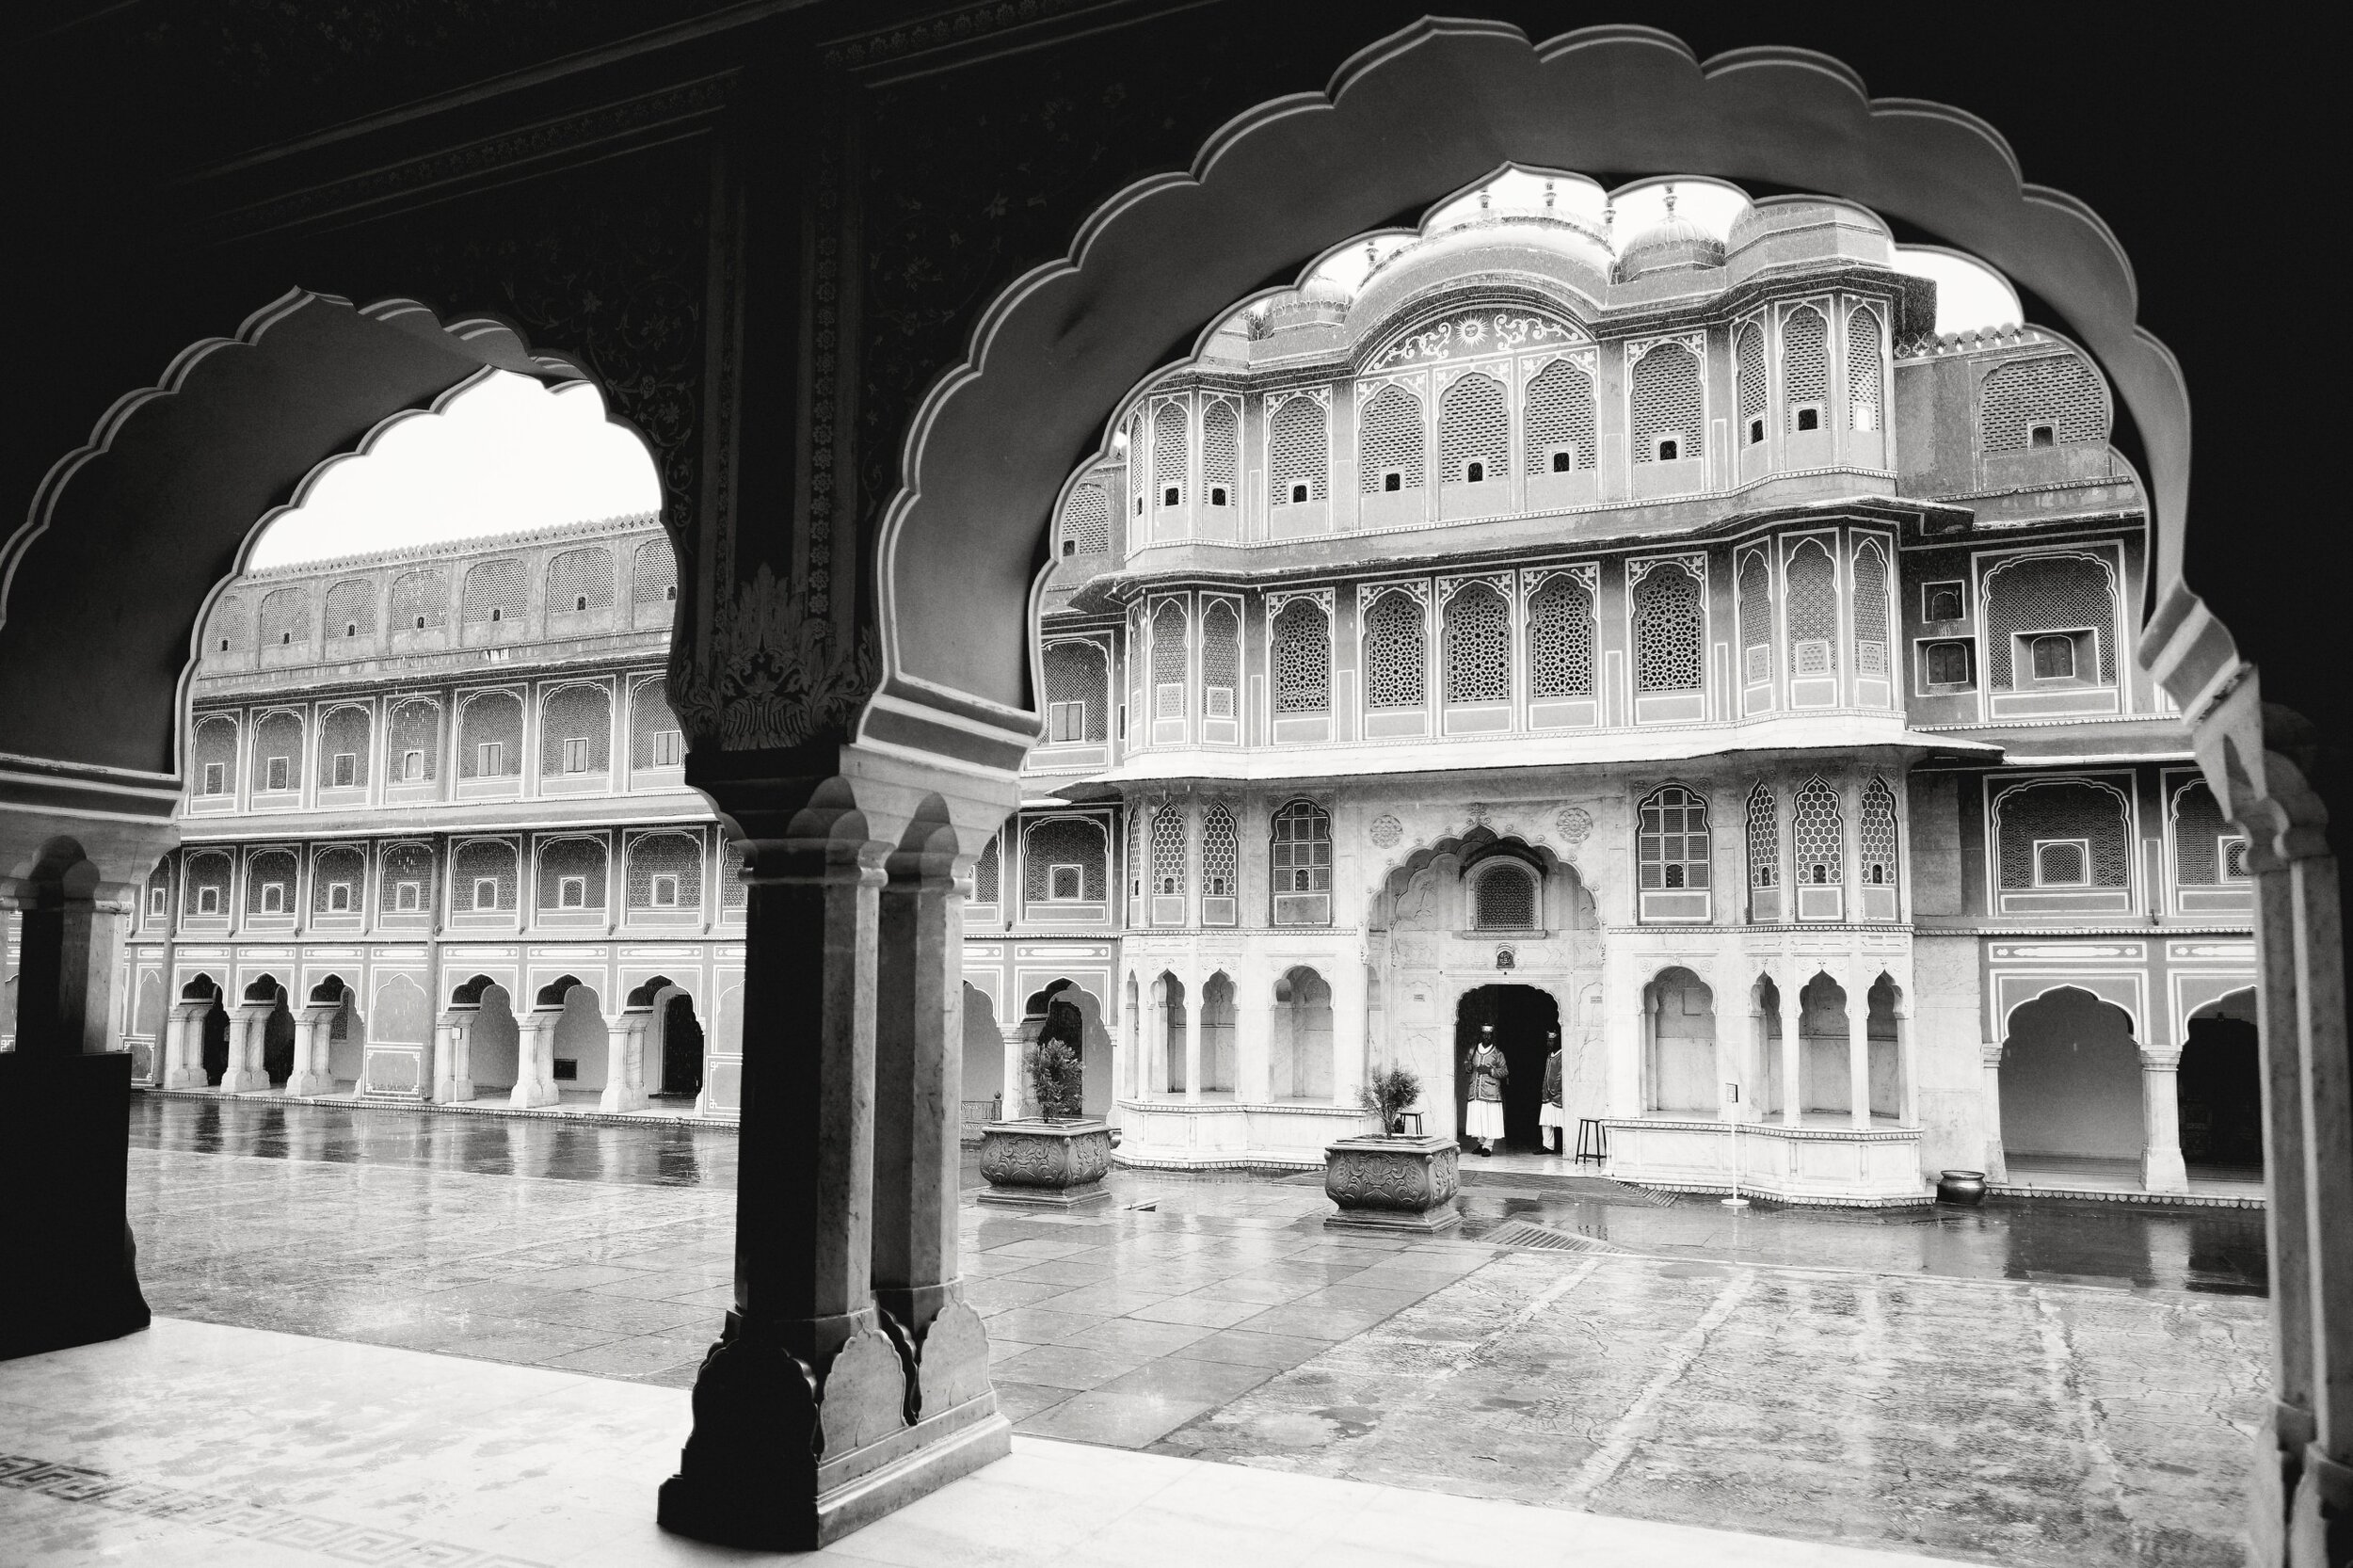  Diwan-i-aam, City Palace, Jaipur 